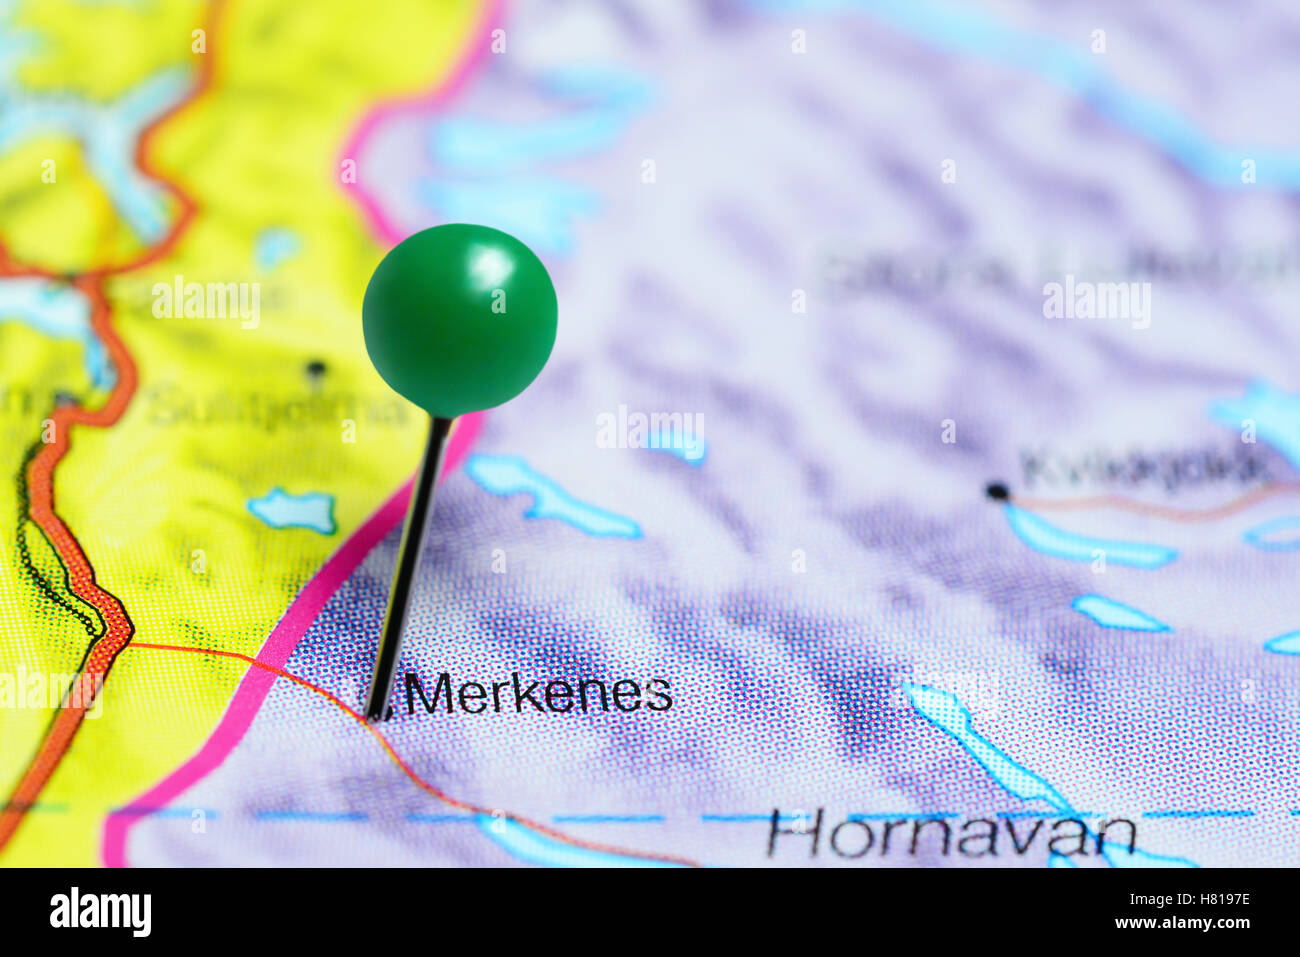 Merkenes pinned on a map of Sweden Stock Photo